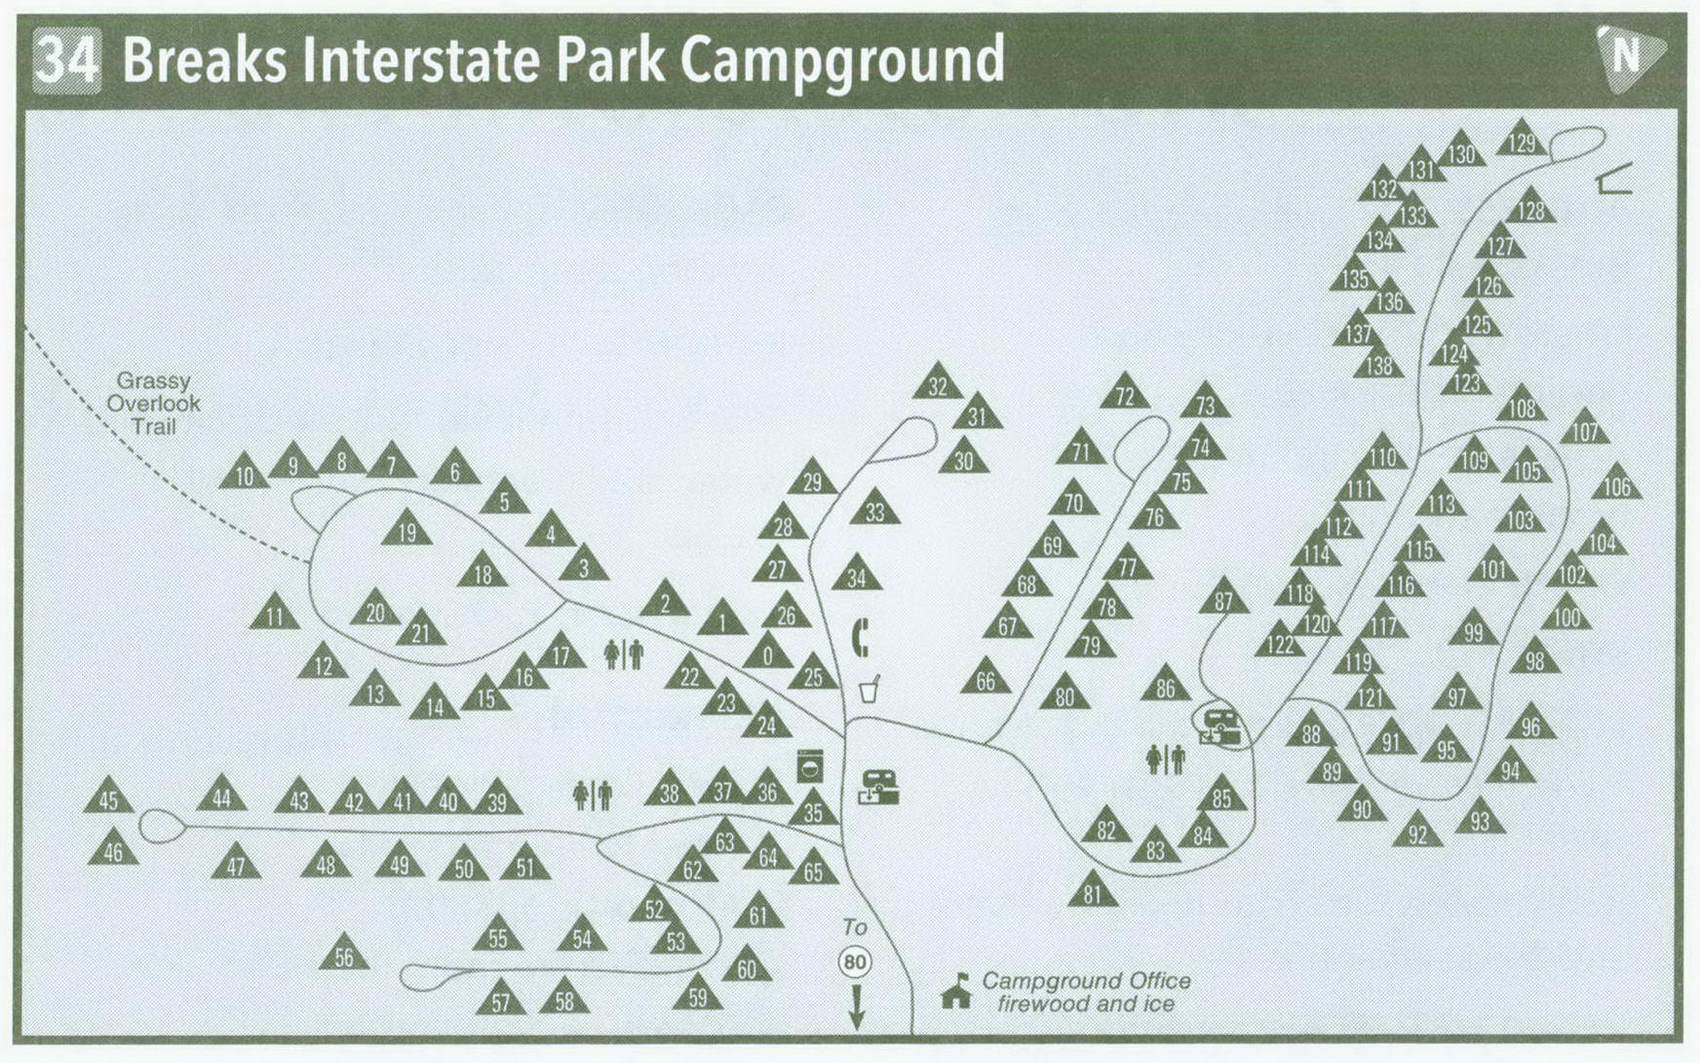 Plan of Breaks Interstate Park Campground